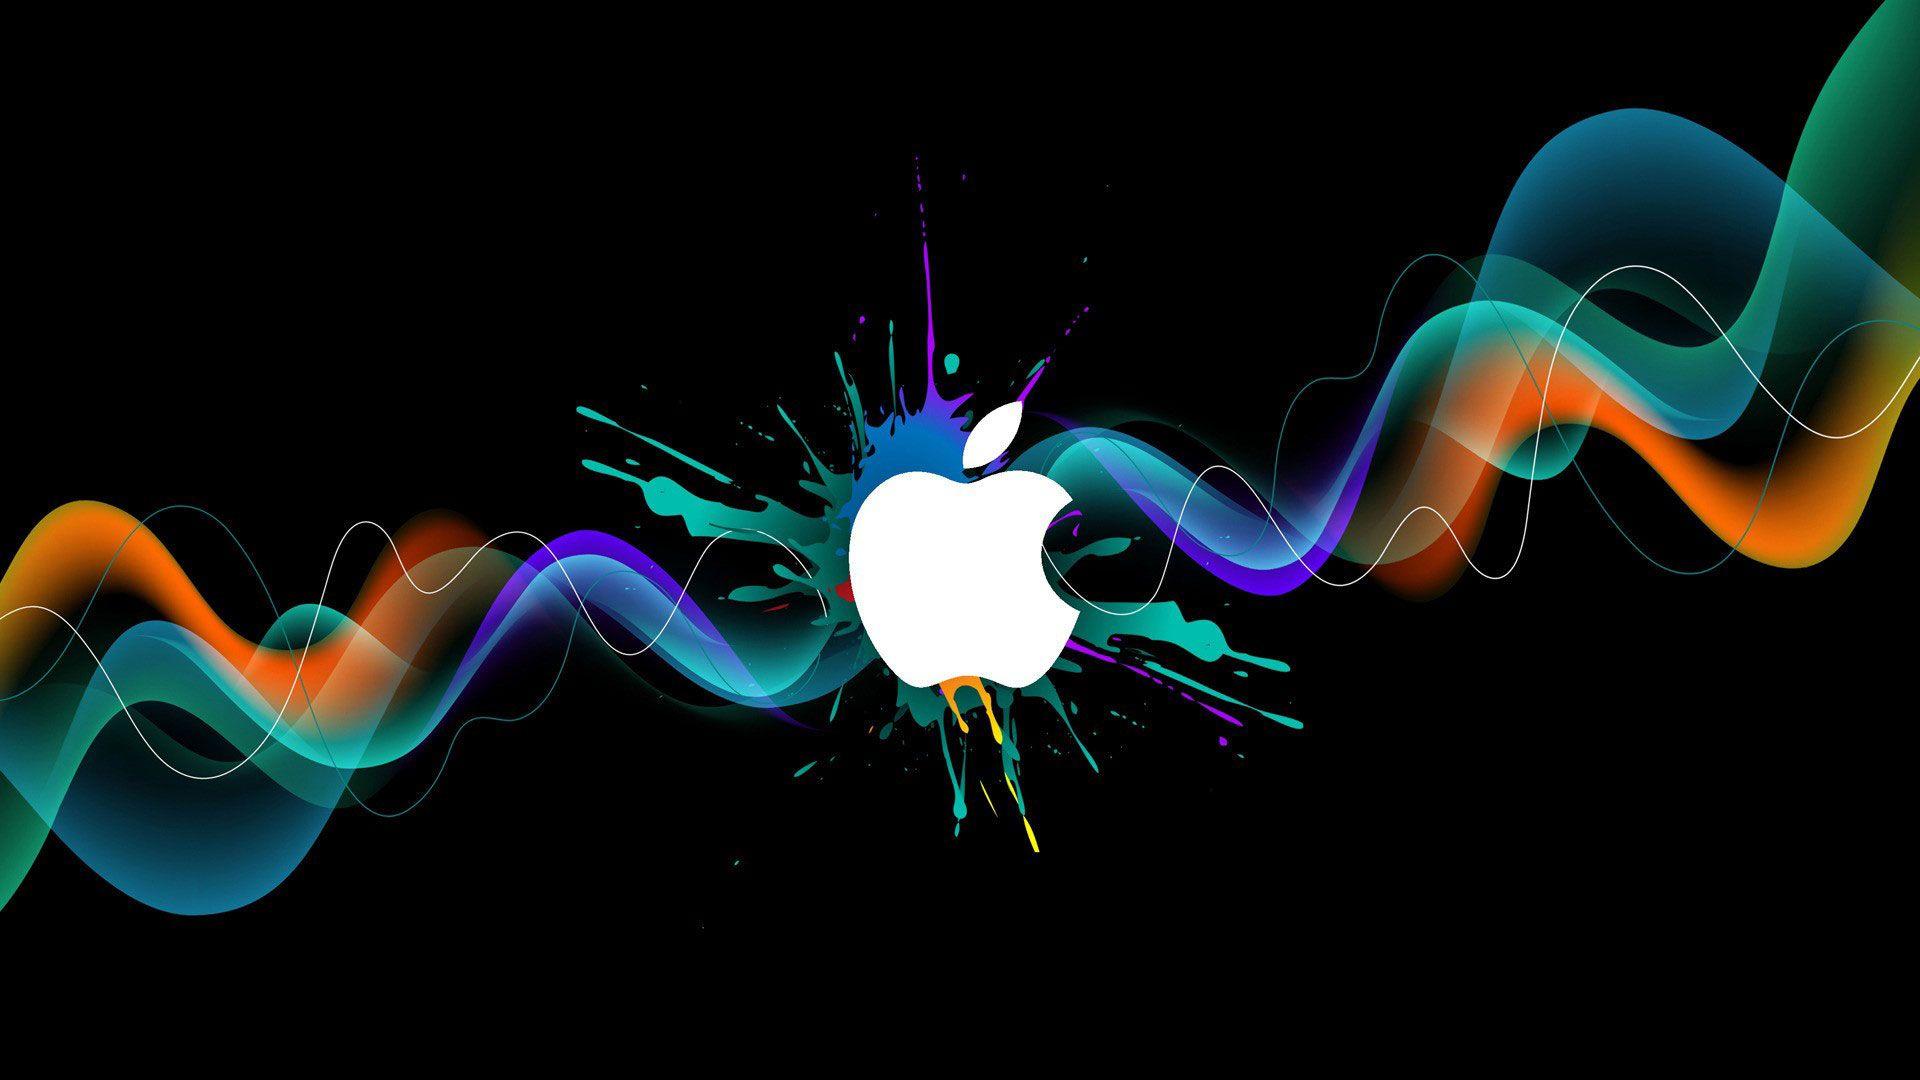 purple Apple logo #apple #logo #texture #pink #hi-tech #1080P #wallpaper  #hdwallpaper #des… | Apple iphone wallpaper hd, Apple wallpaper iphone, Hd  apple wallpapers